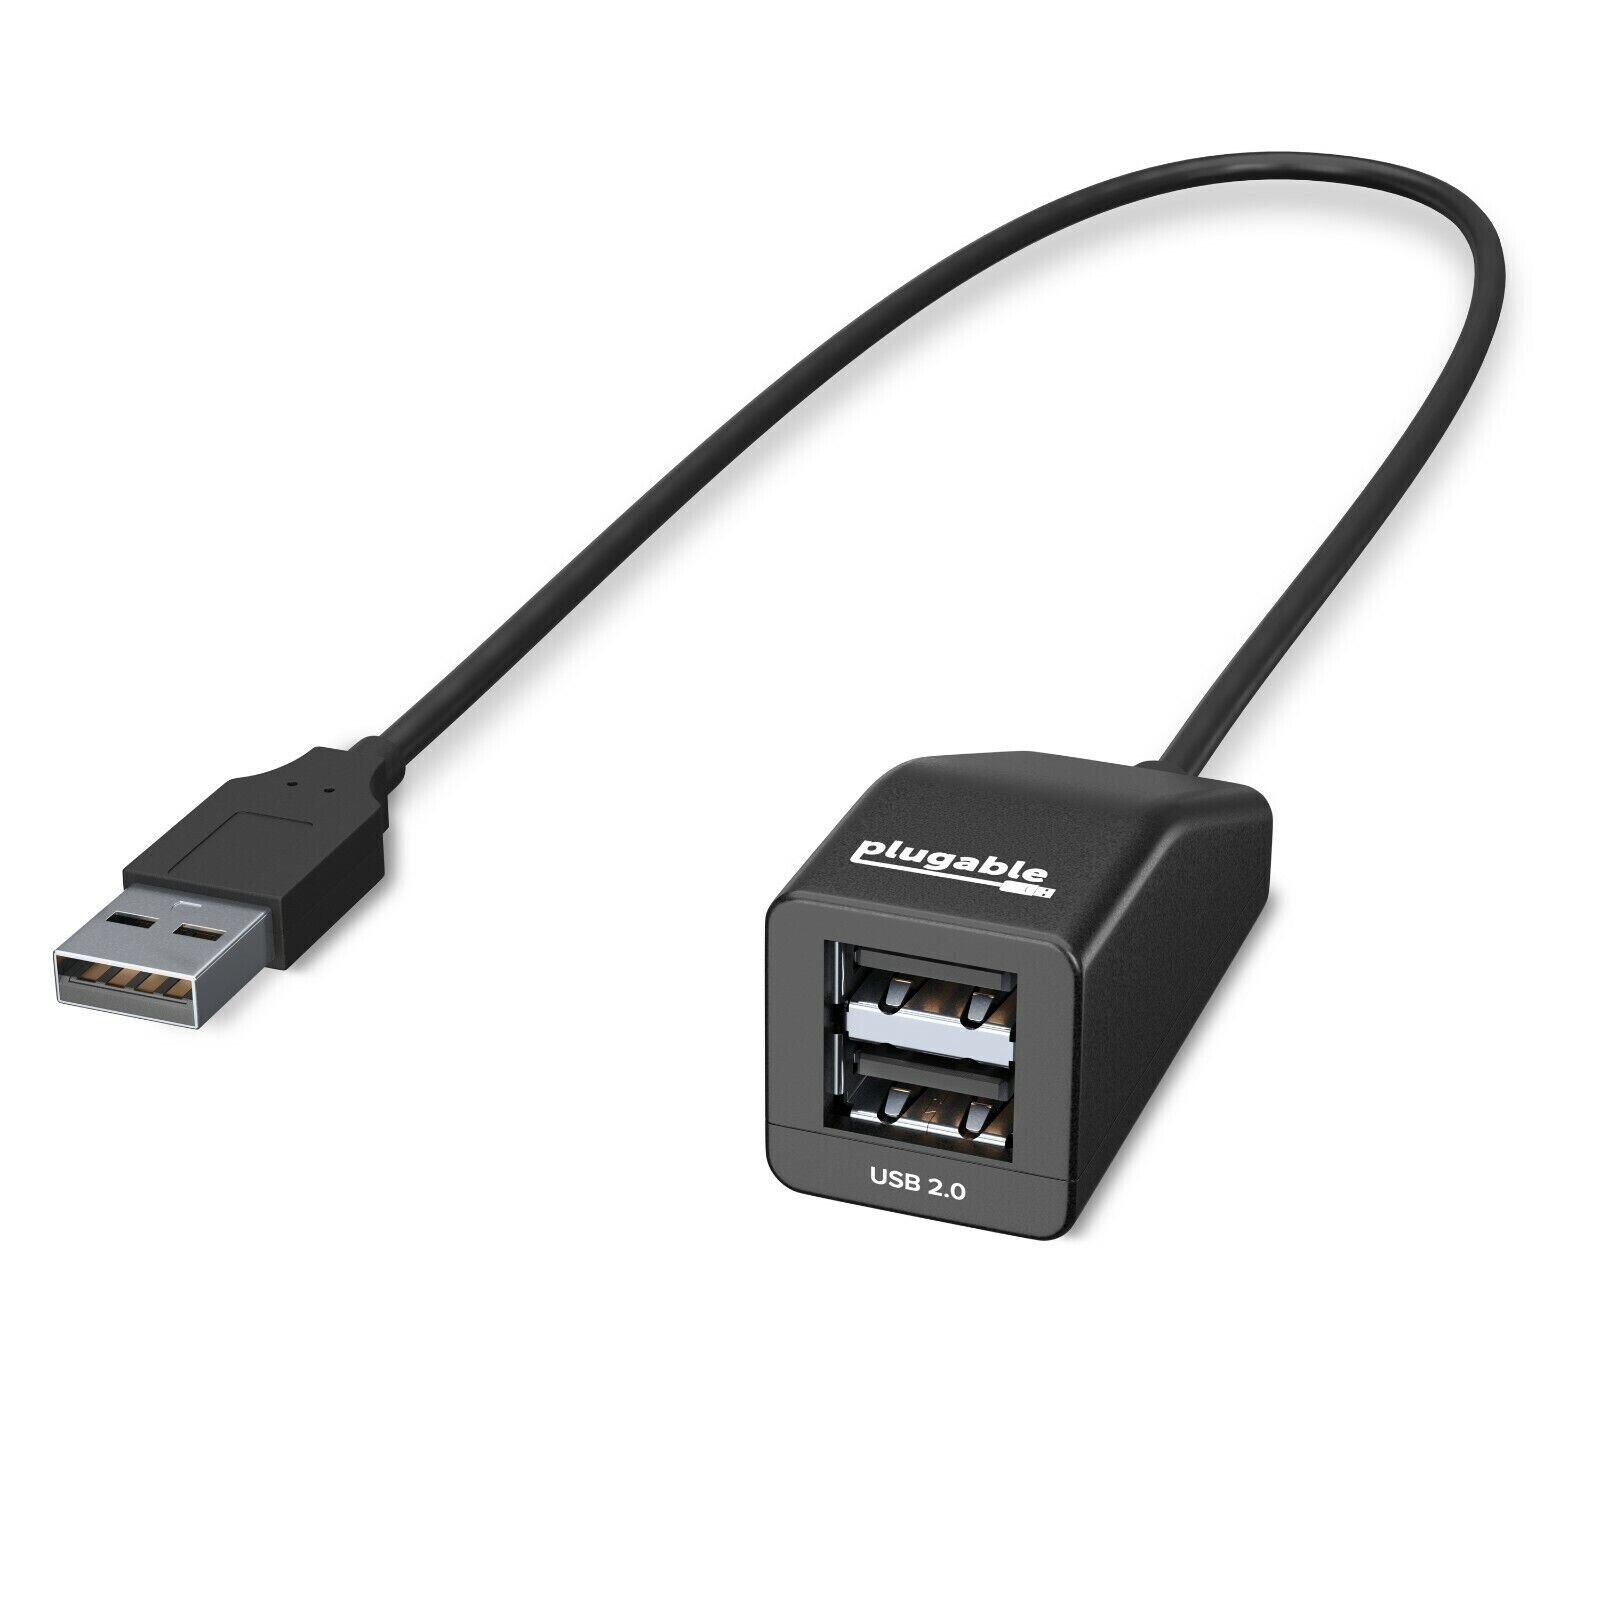 Plugable USB 2.0 2-Port High Speed Ultra Compact Hub Splitter (480 Mbps)